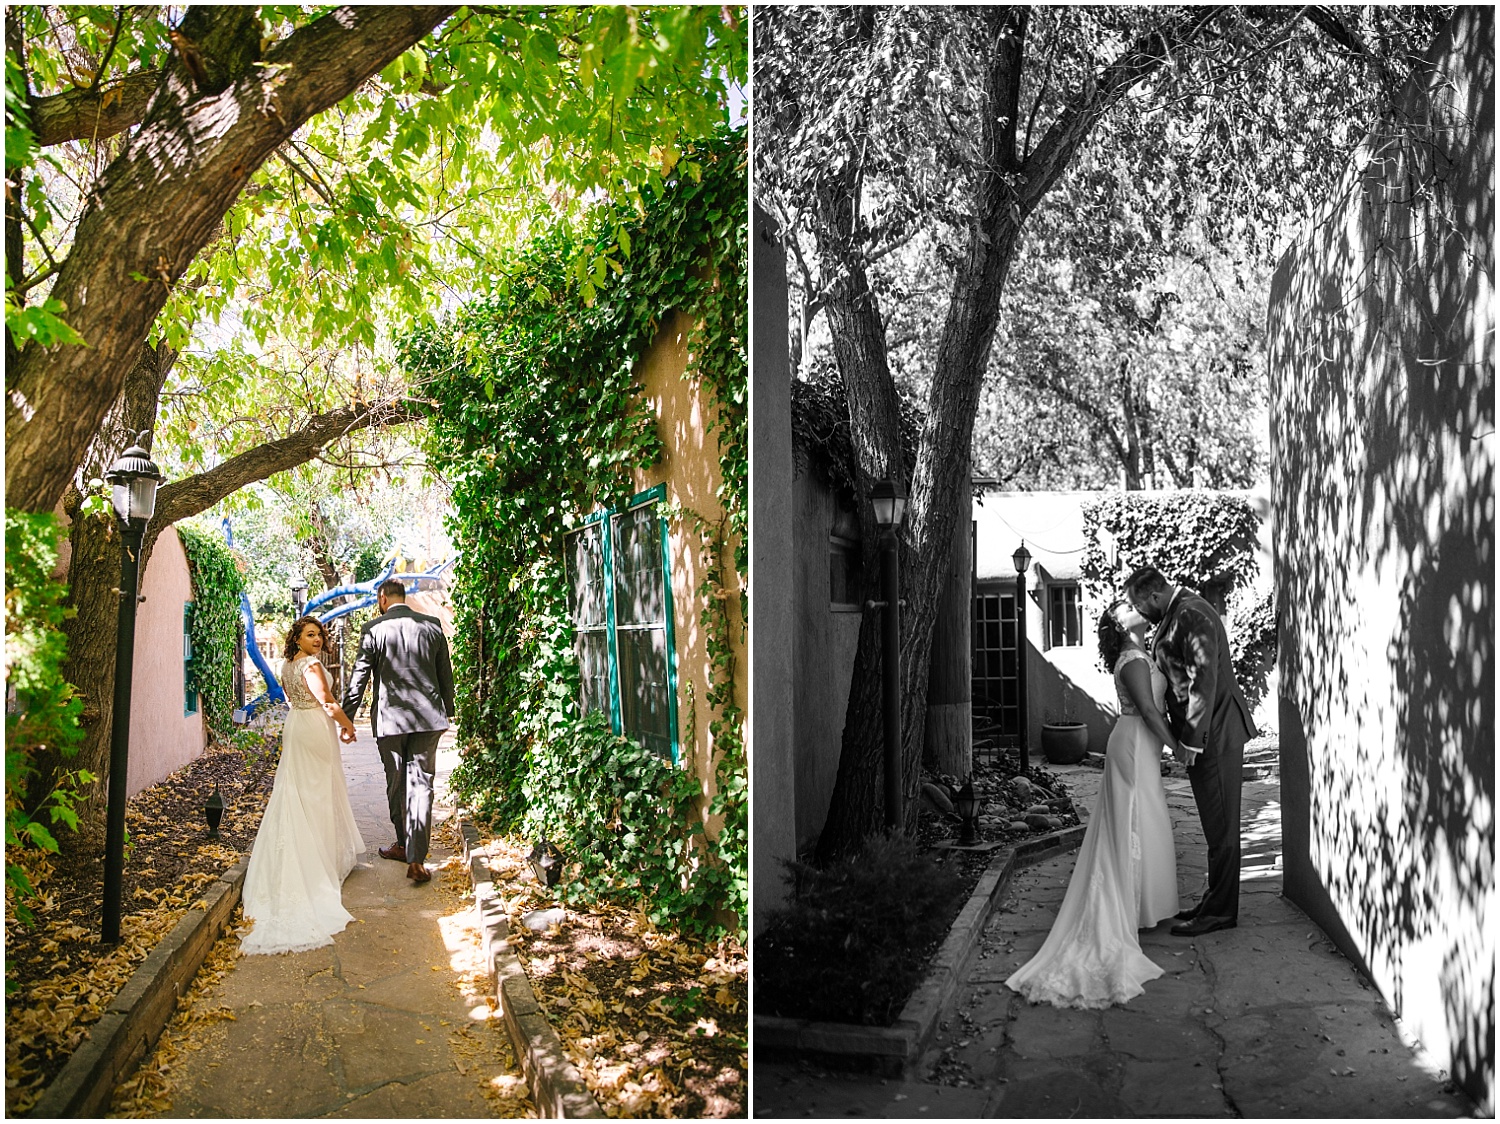 Bride and groom walking under the trees at Las Palomas Hotel before their intimate Santa Fe wedding